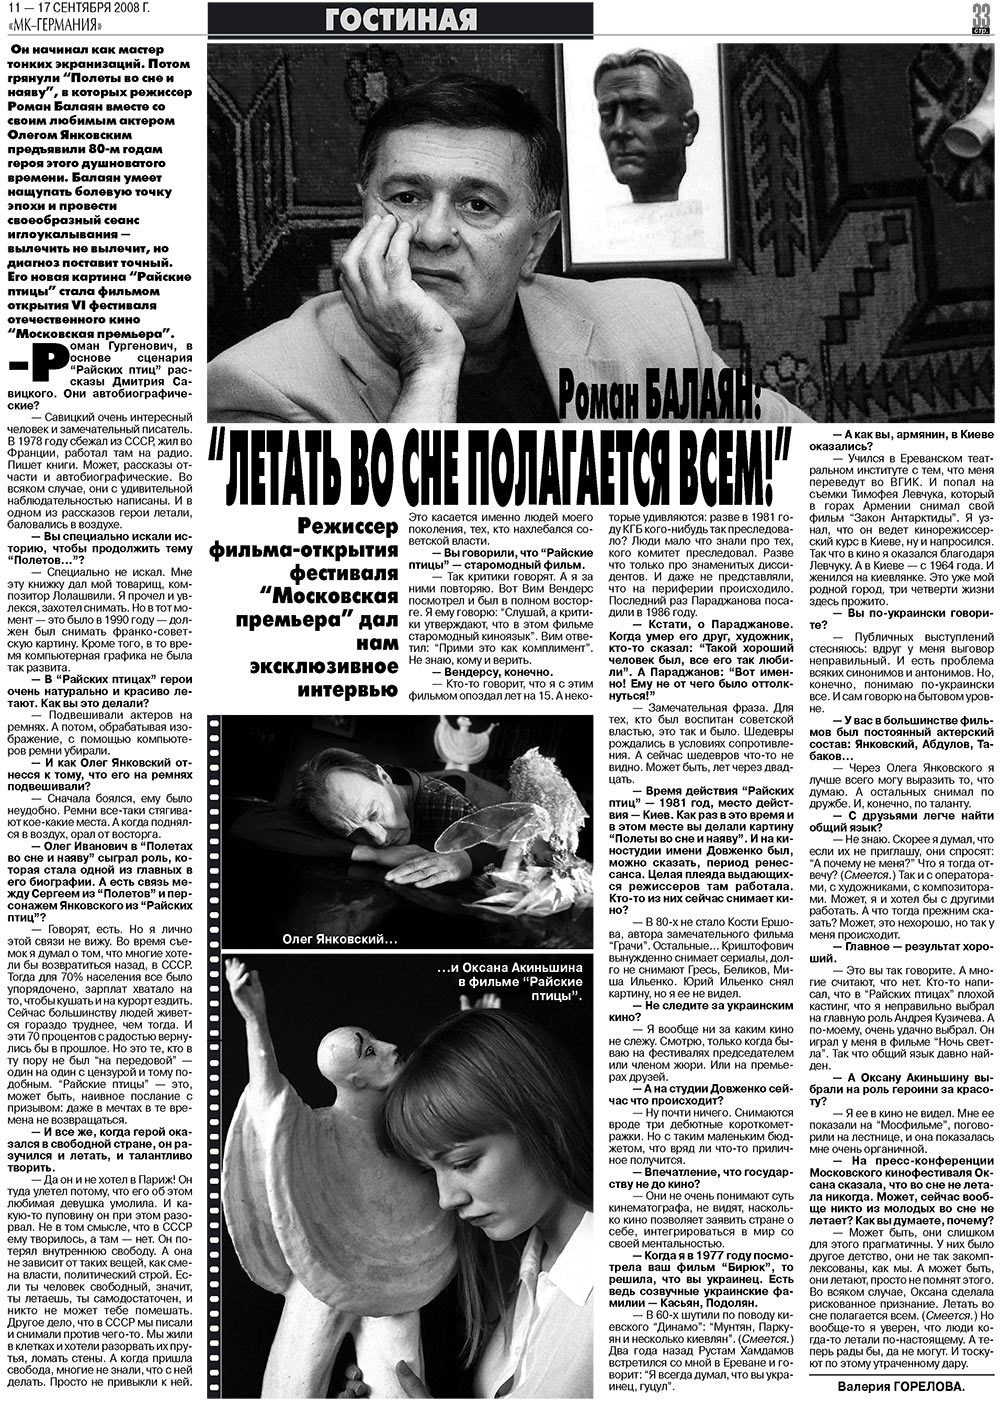 МК-Германия, газета. 2008 №37 стр.33